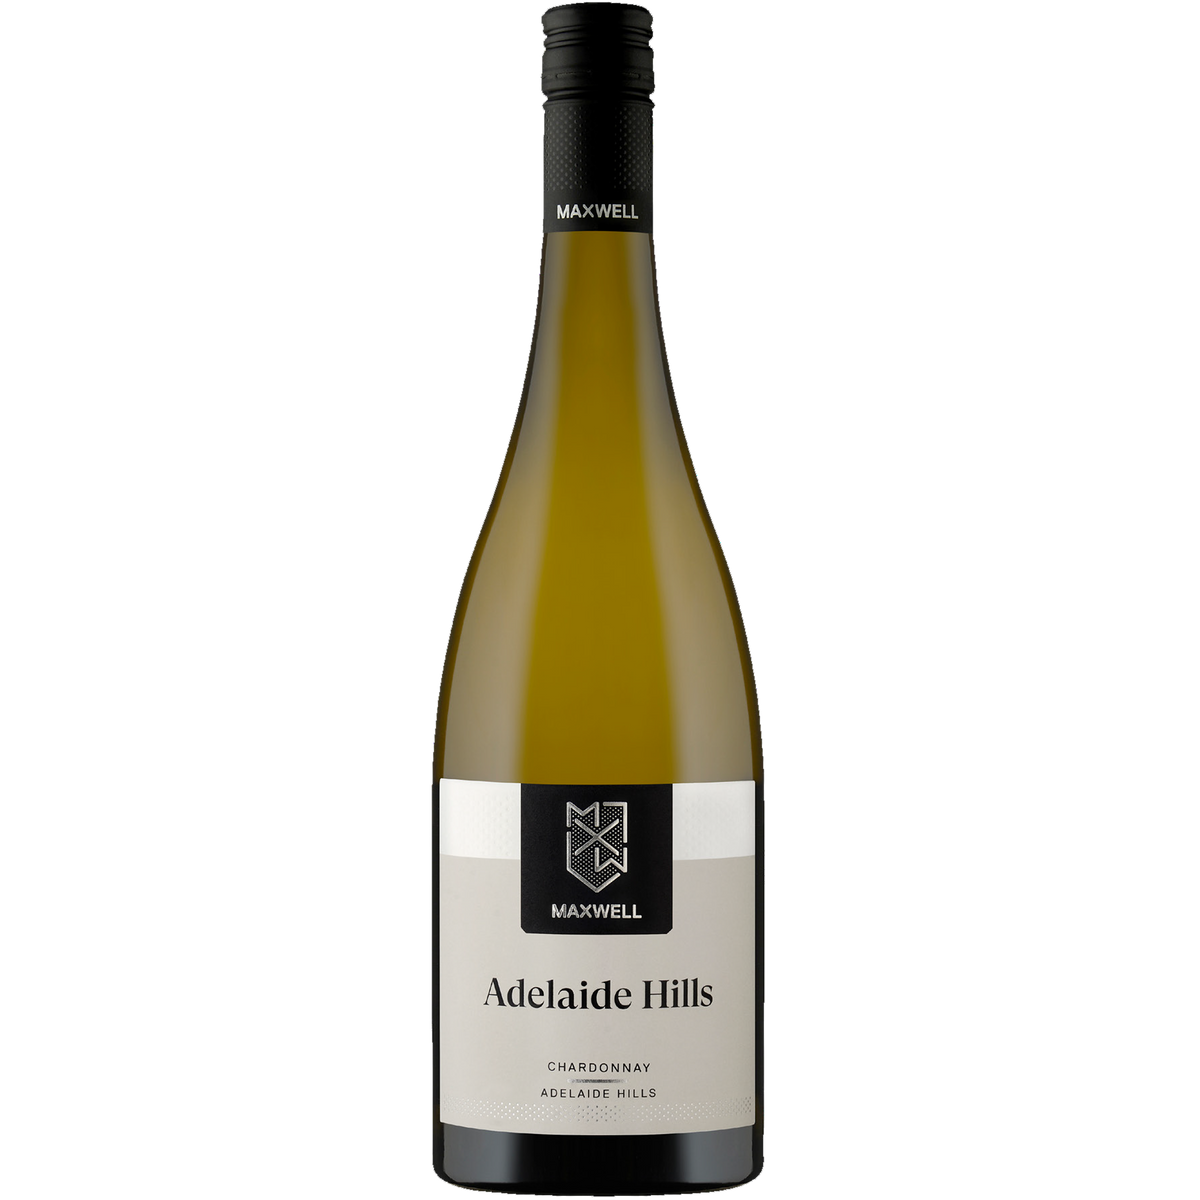 Maxwell Adelaide Hills Chardonnay